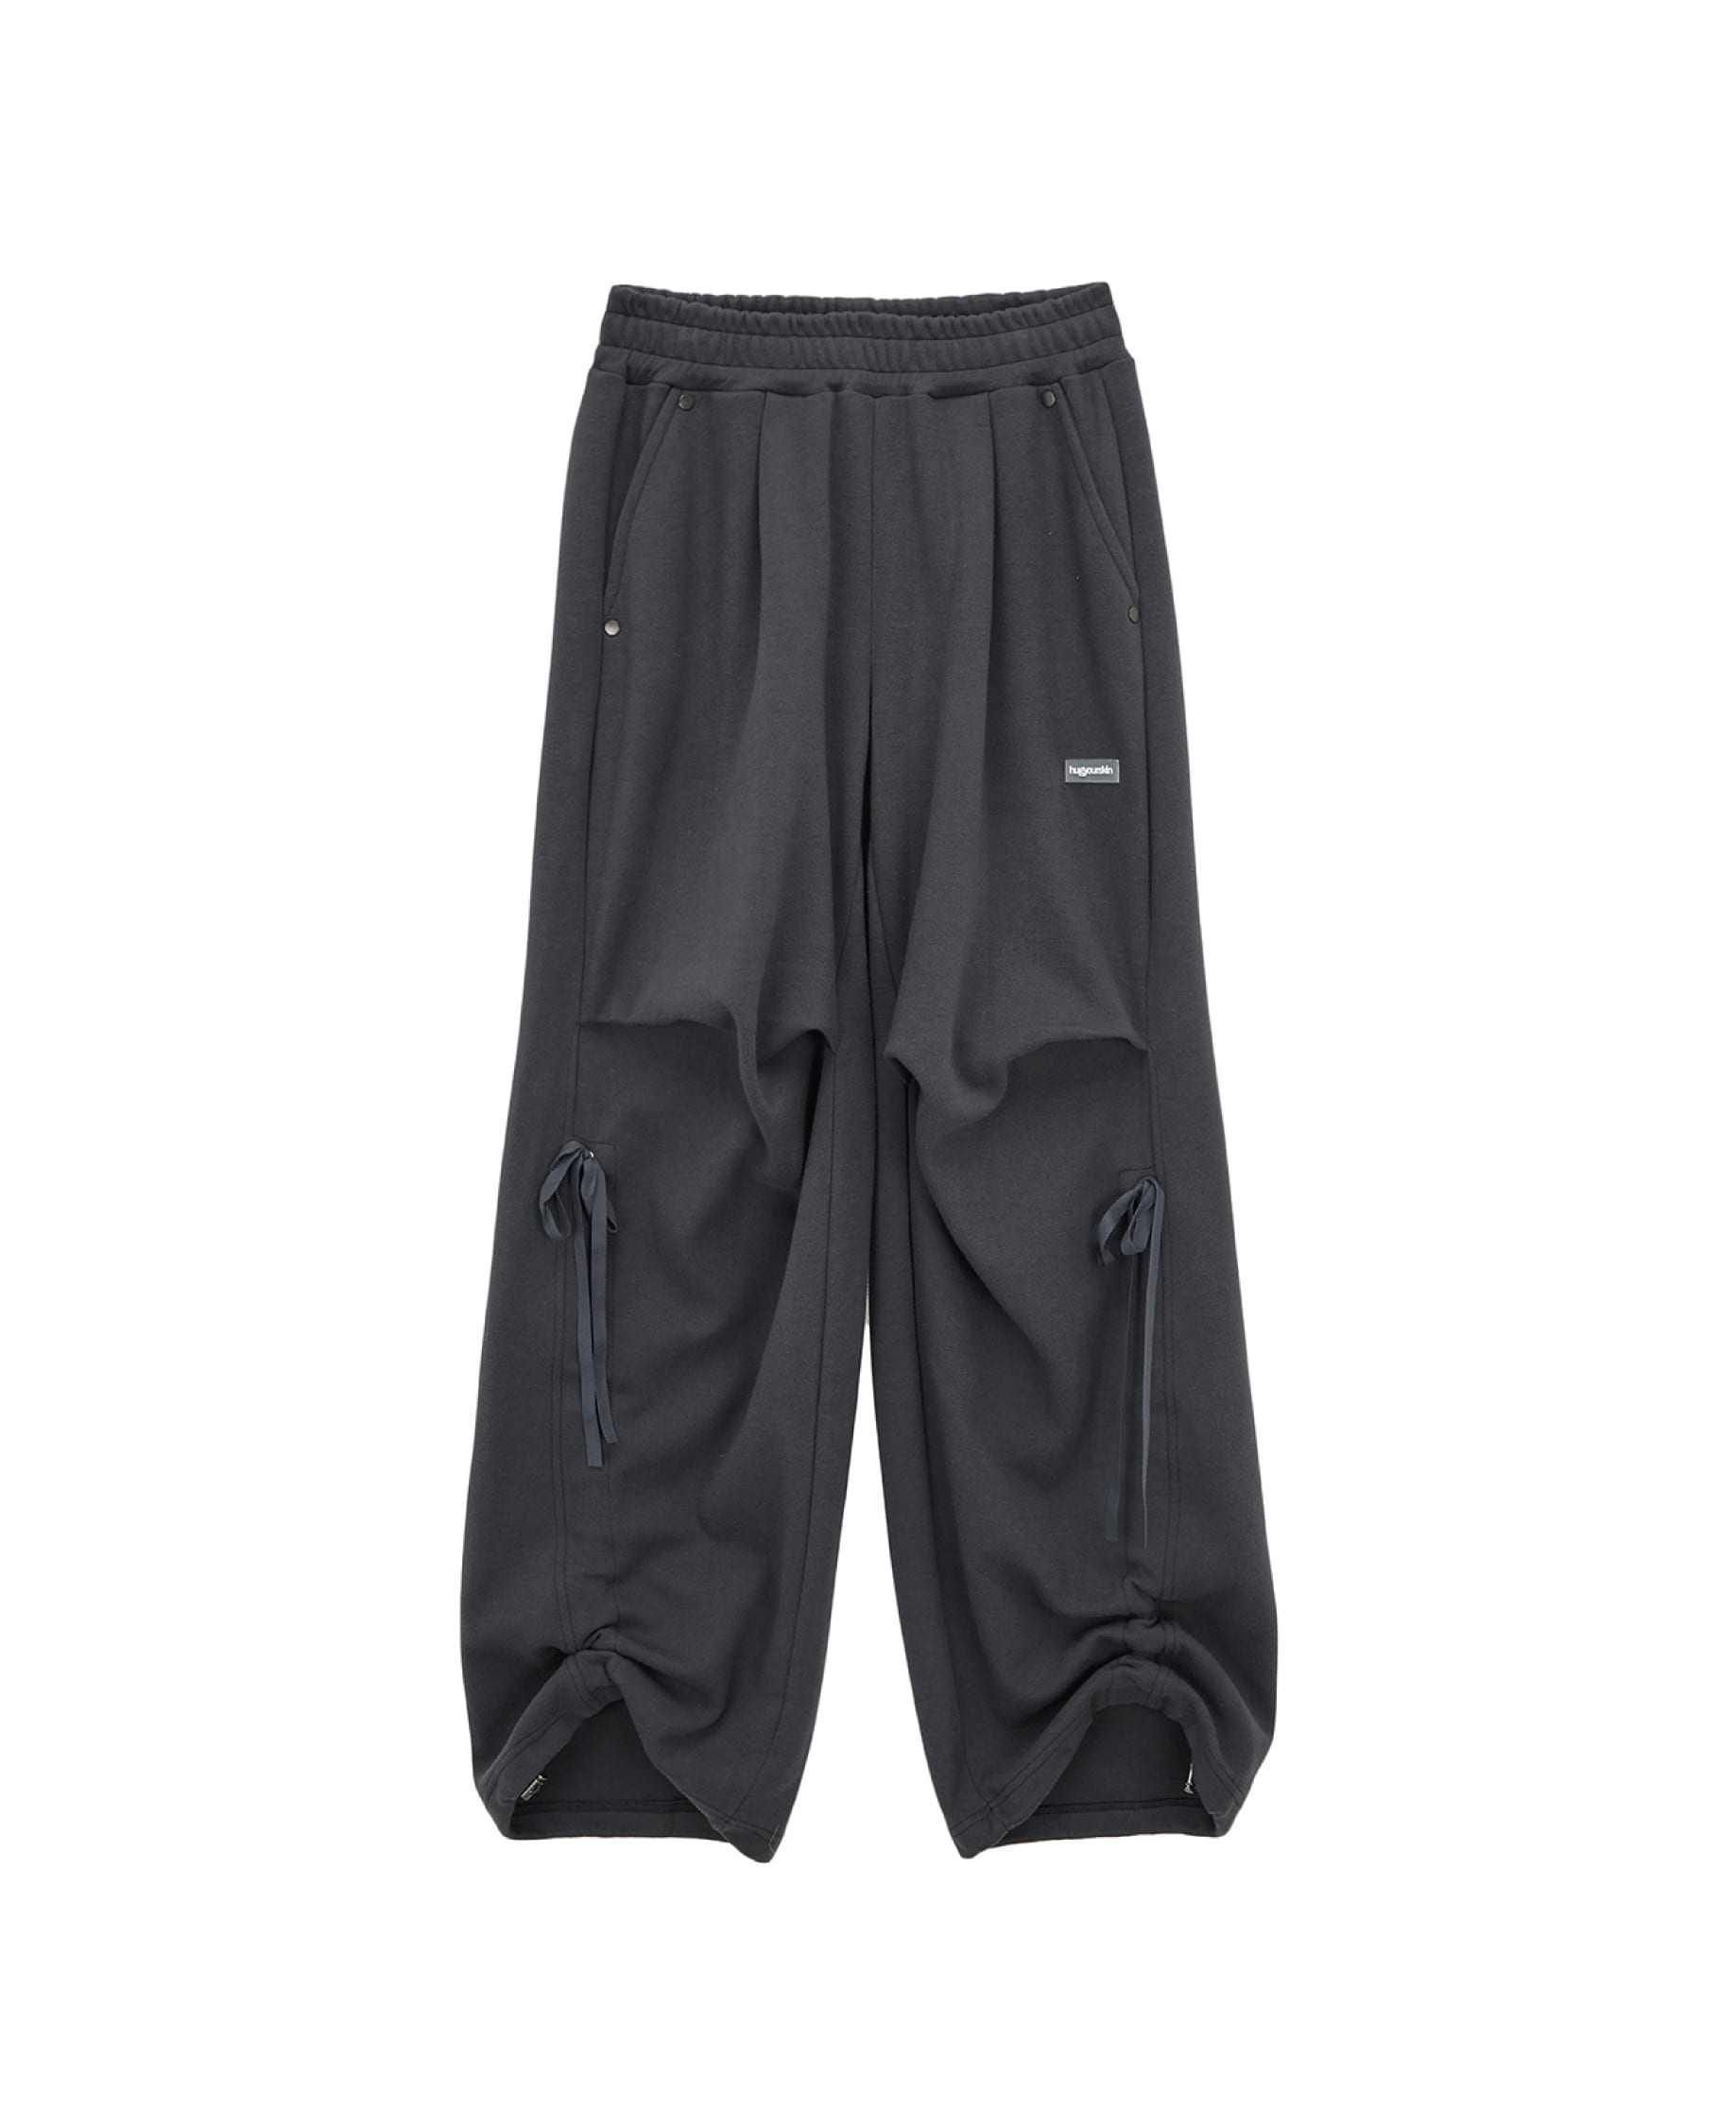 Wide jogger pants (charcoal)